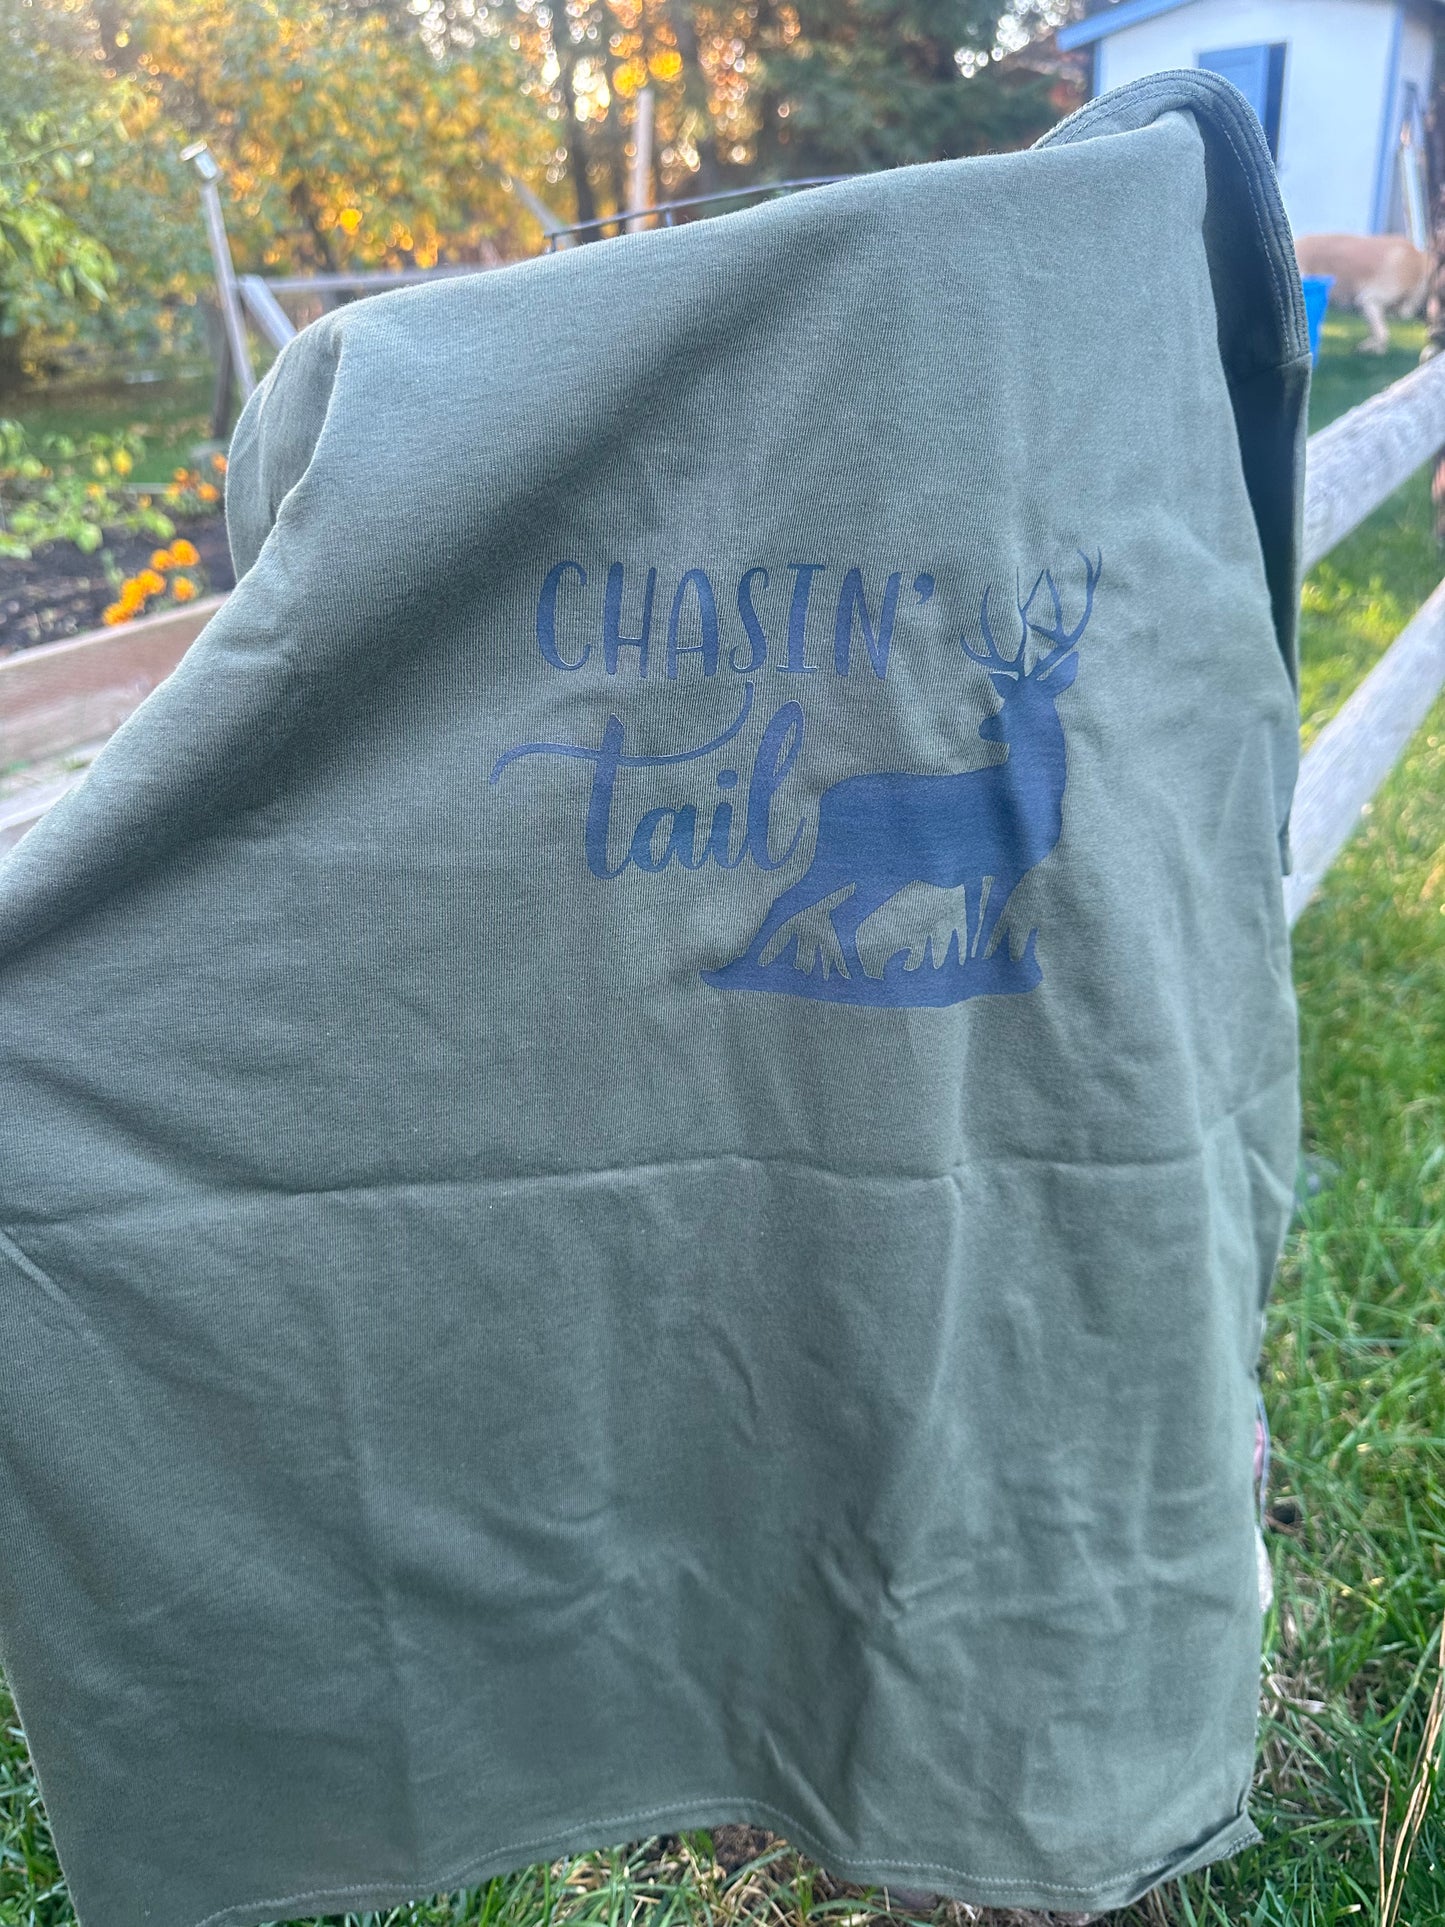 Chasing Tail T-Shirt